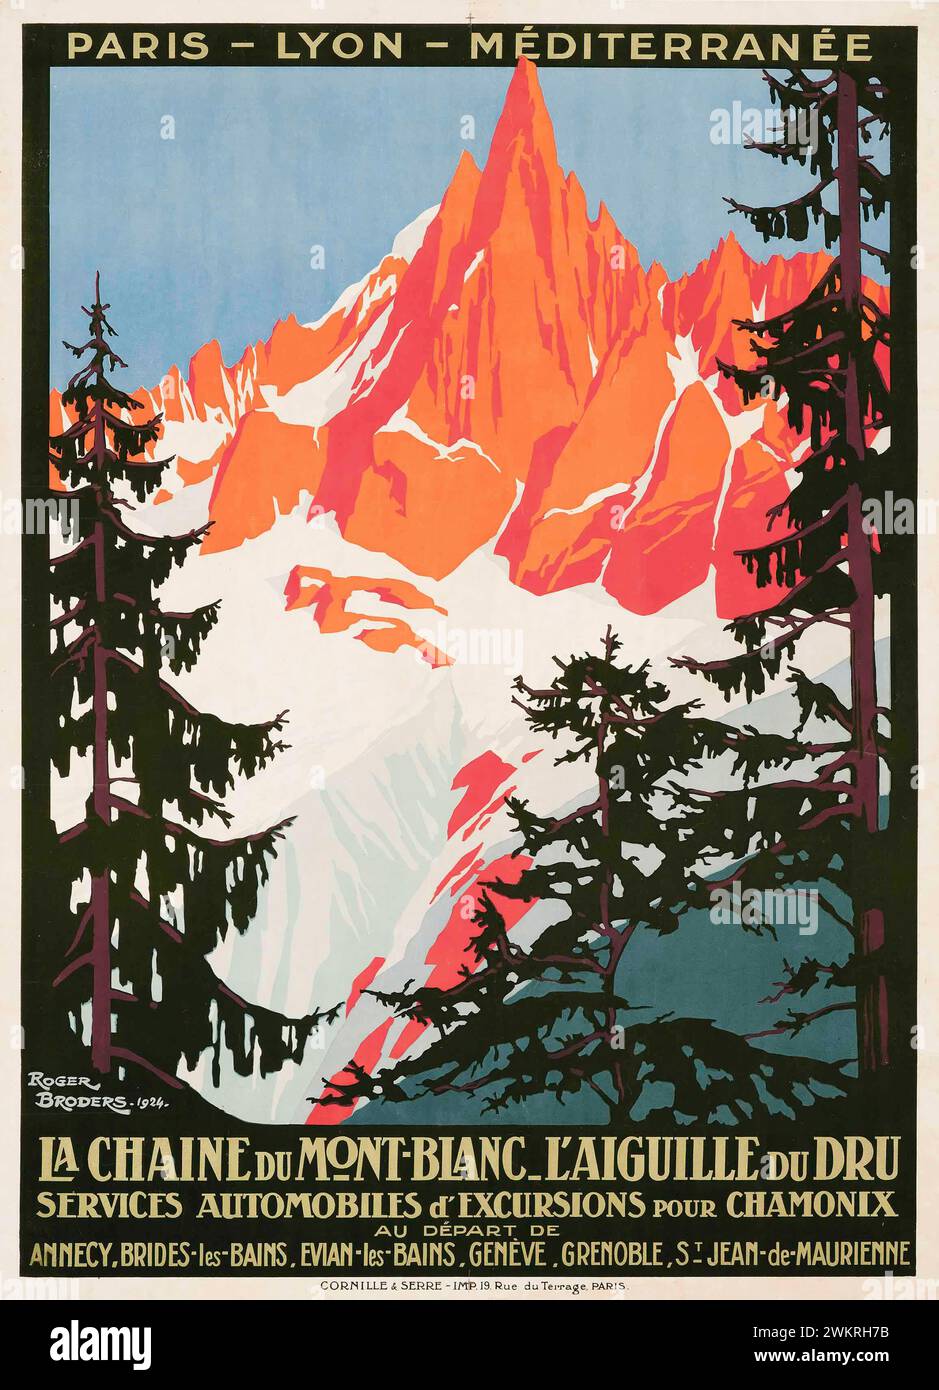 Vintage Travel Poster. "La Chaine du Mont-Blanc- L'Aiguille du Dru"   France by Roger Broders, 1924,  Car Service poster, showing the Alps peaks of the Aiguille Stock Photo